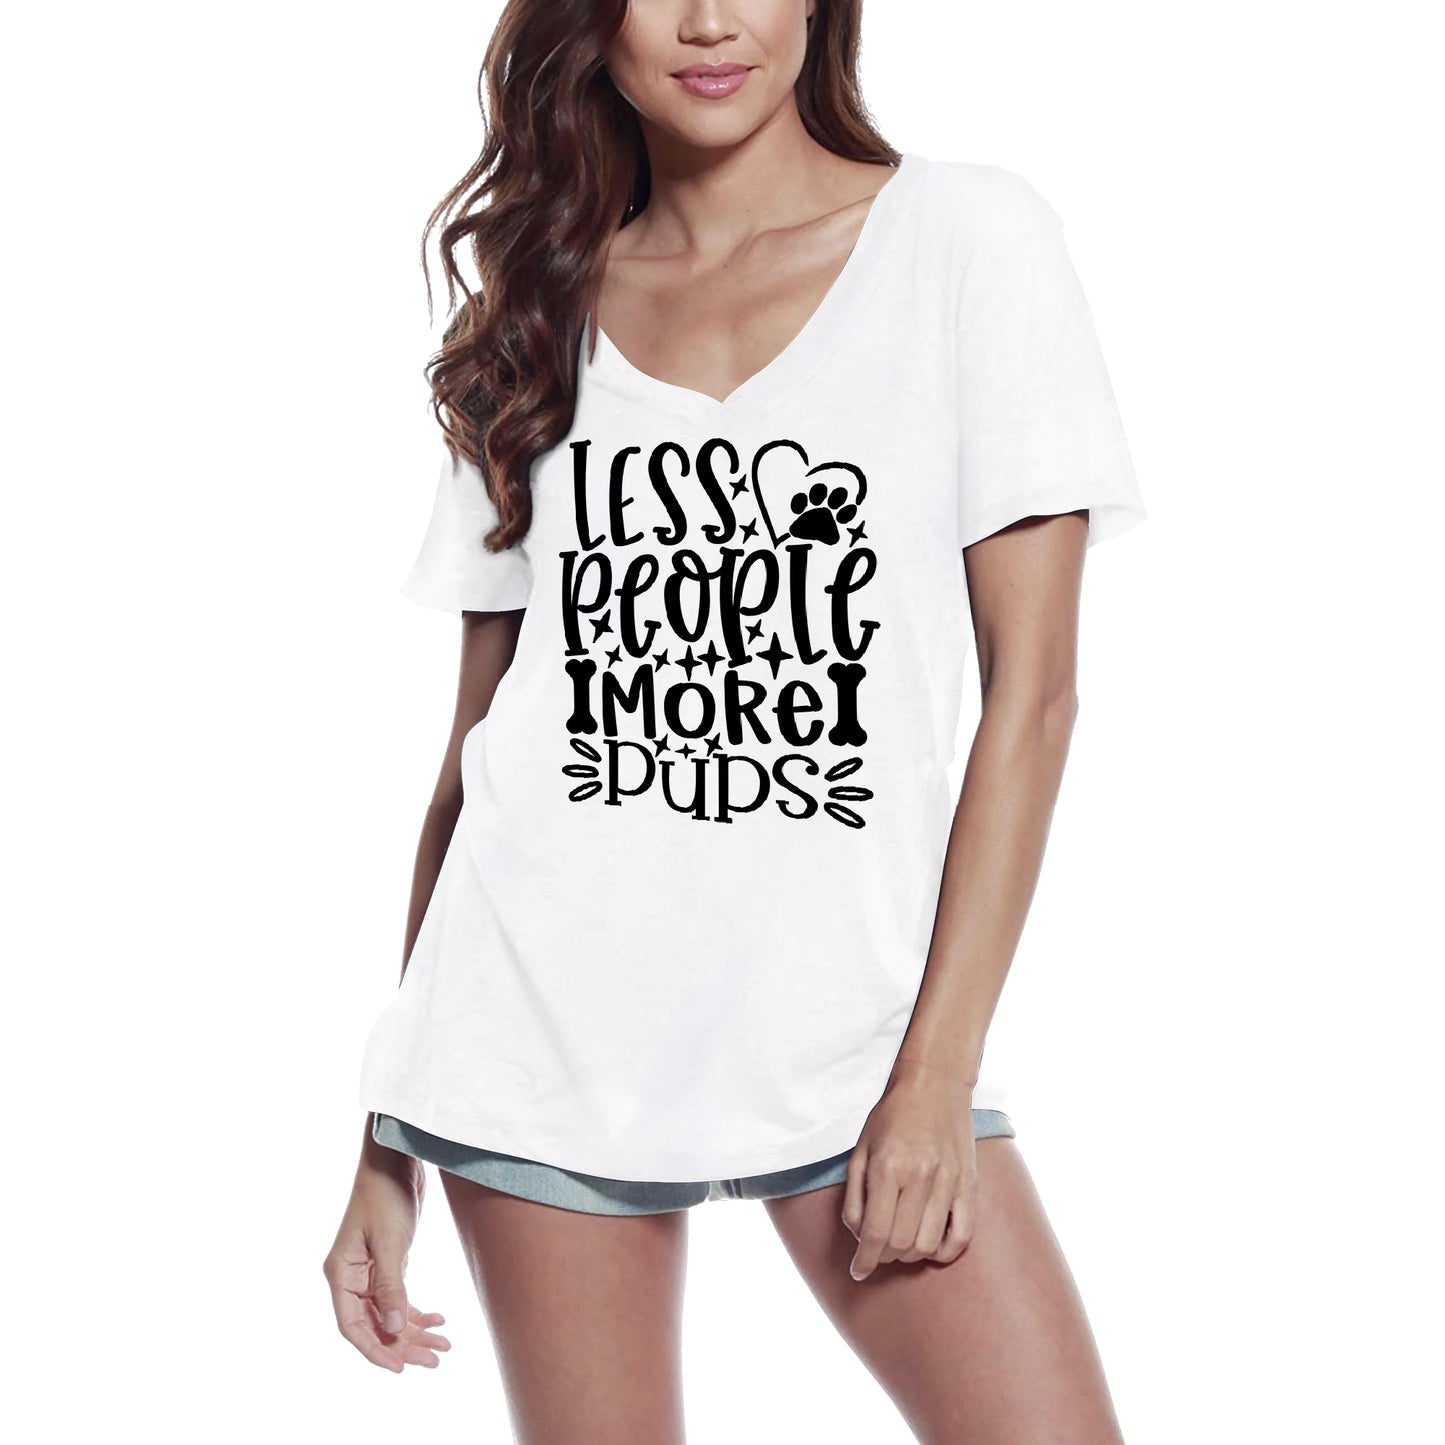 ULTRABASIC Women's T-Shirt Less People More Pups - Short Sleeve Tee Shirt Tops